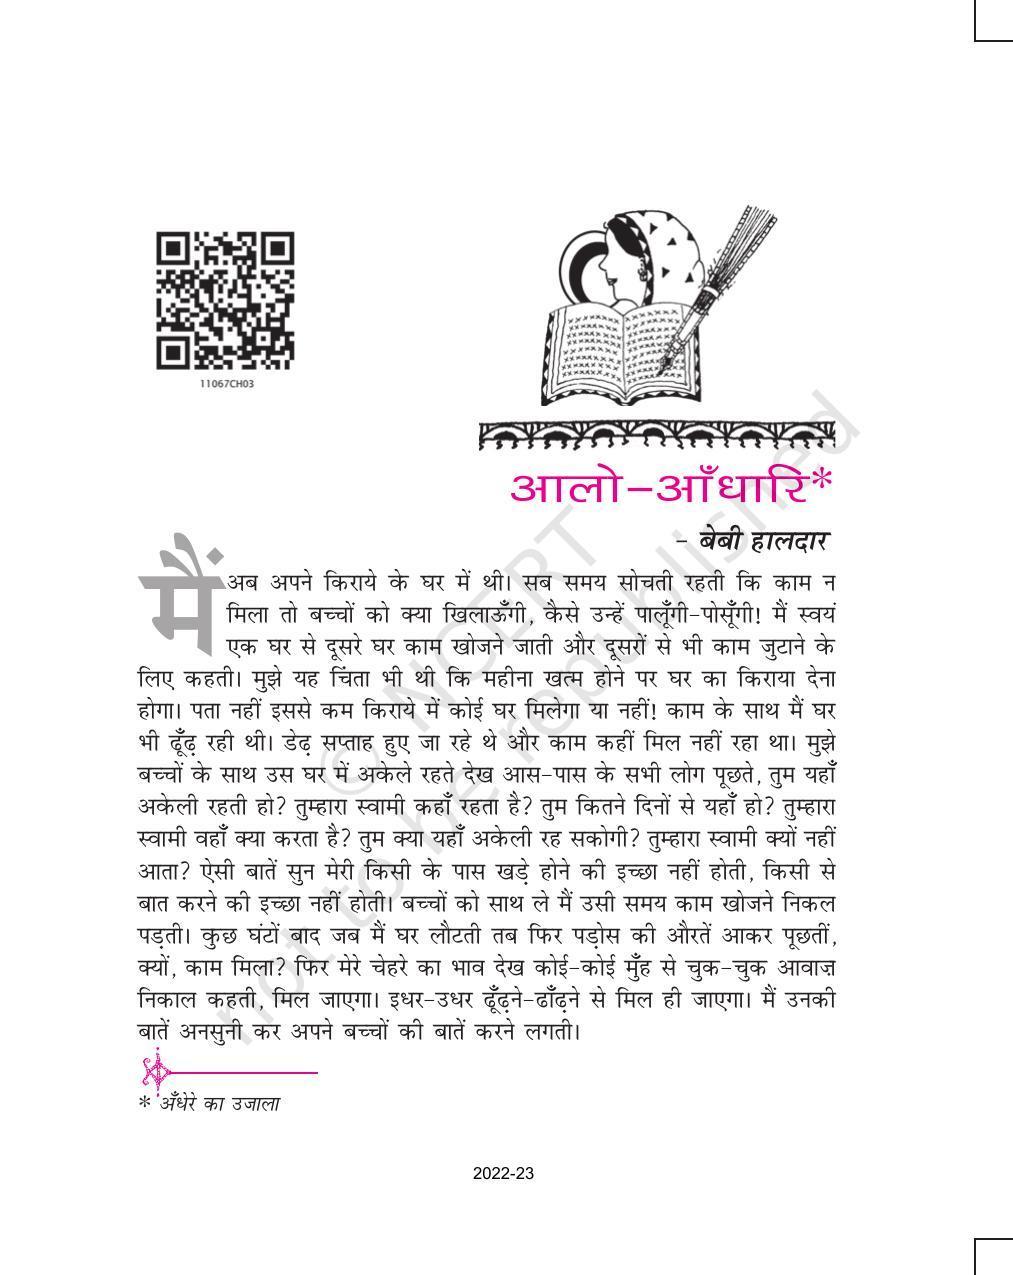 NCERT Book for Class 11 Hindi Vitan Chapter 3 आलो आँधारि - Page 1